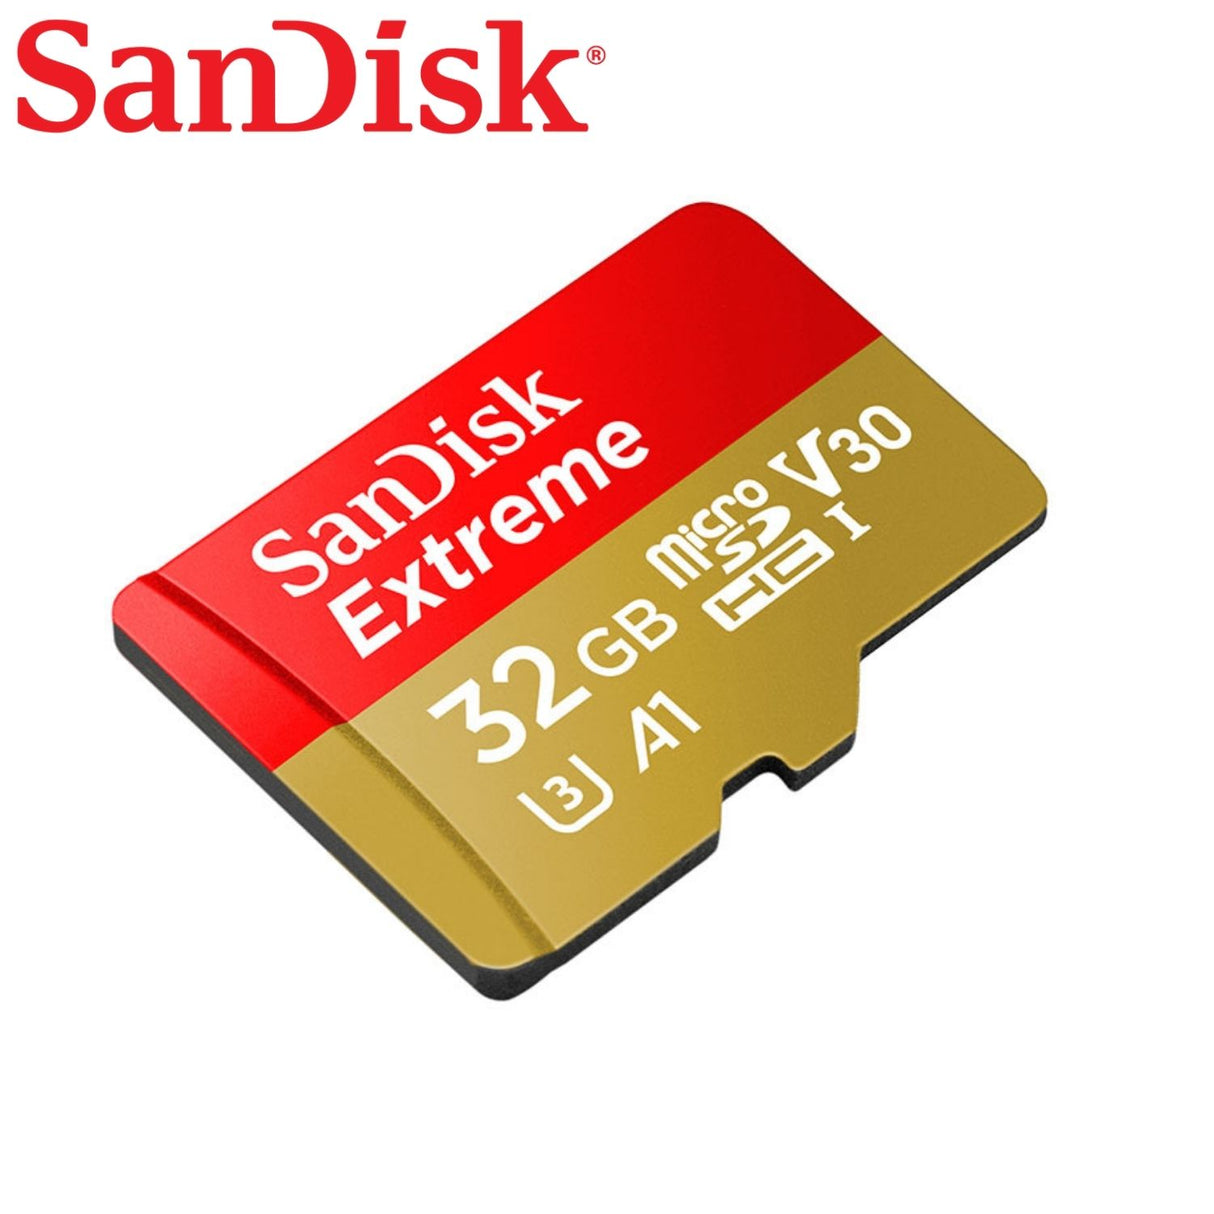 SanDisk Extreme microSD Card 32GB